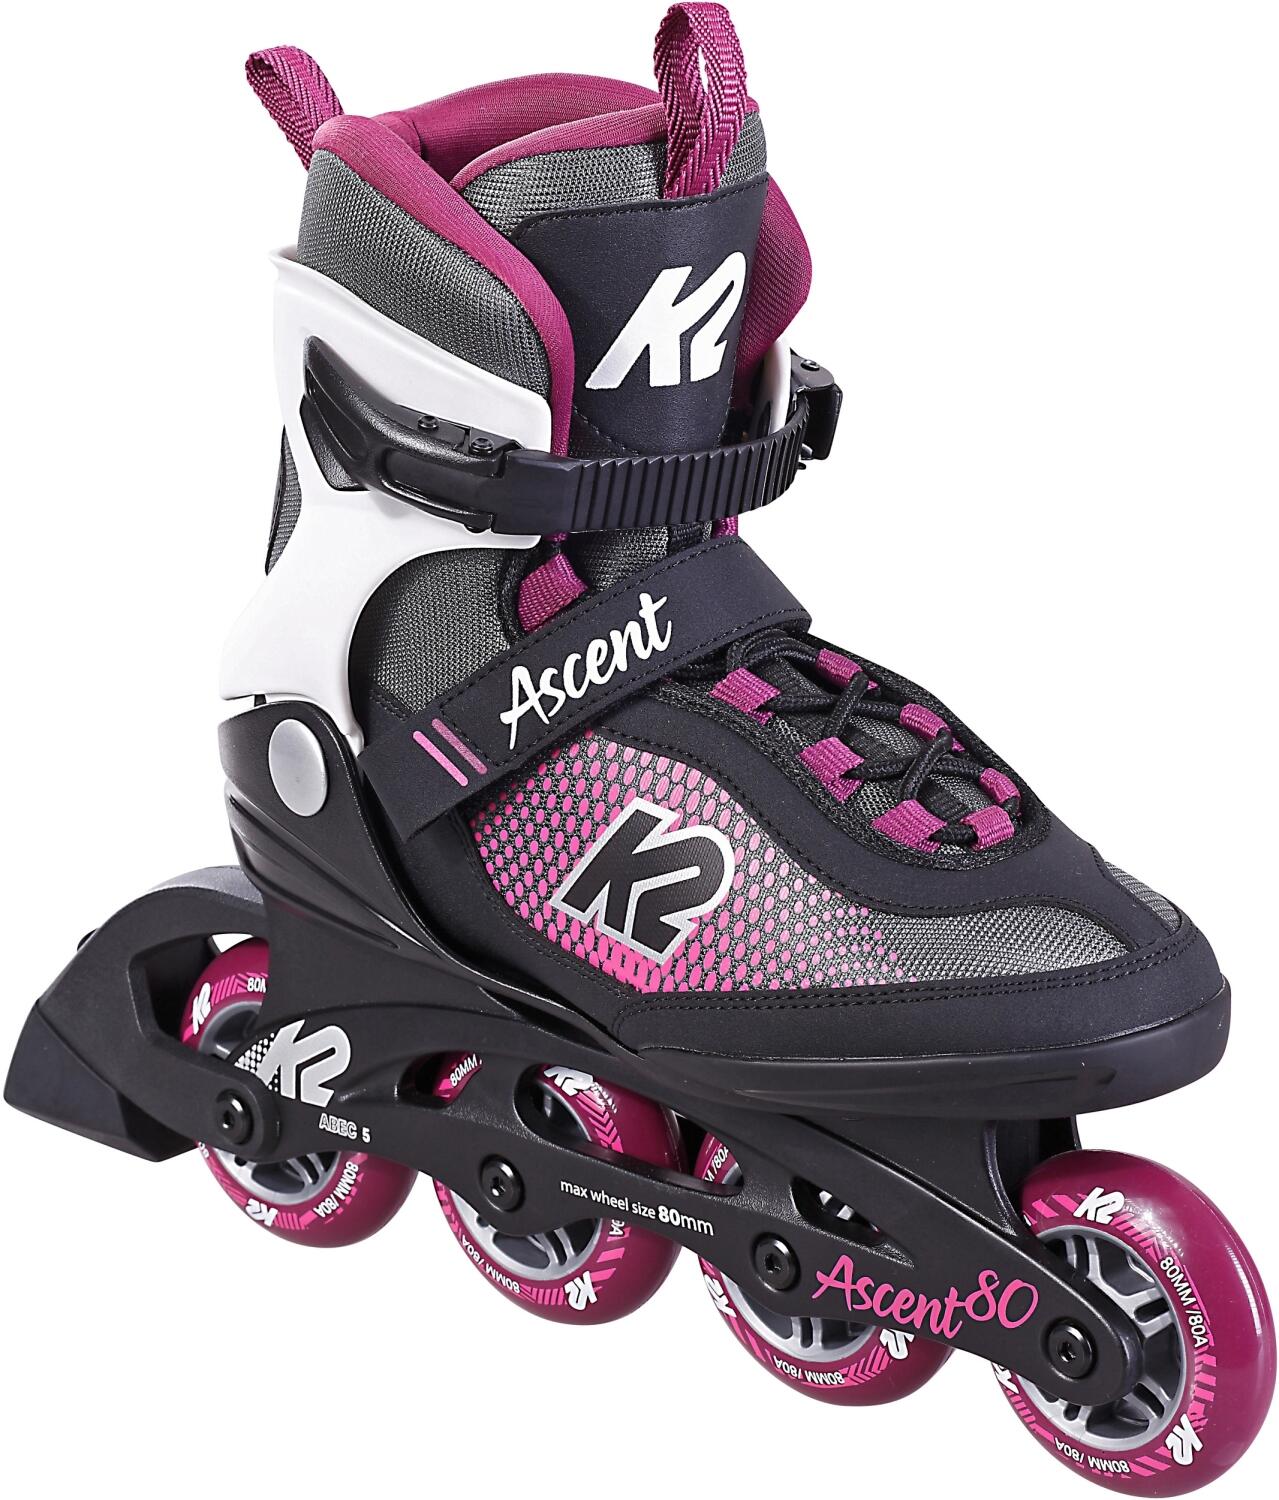 K2 Ascent 80 Inlineskate Damen (39.5 (US=8.5), design) von K2 Skates